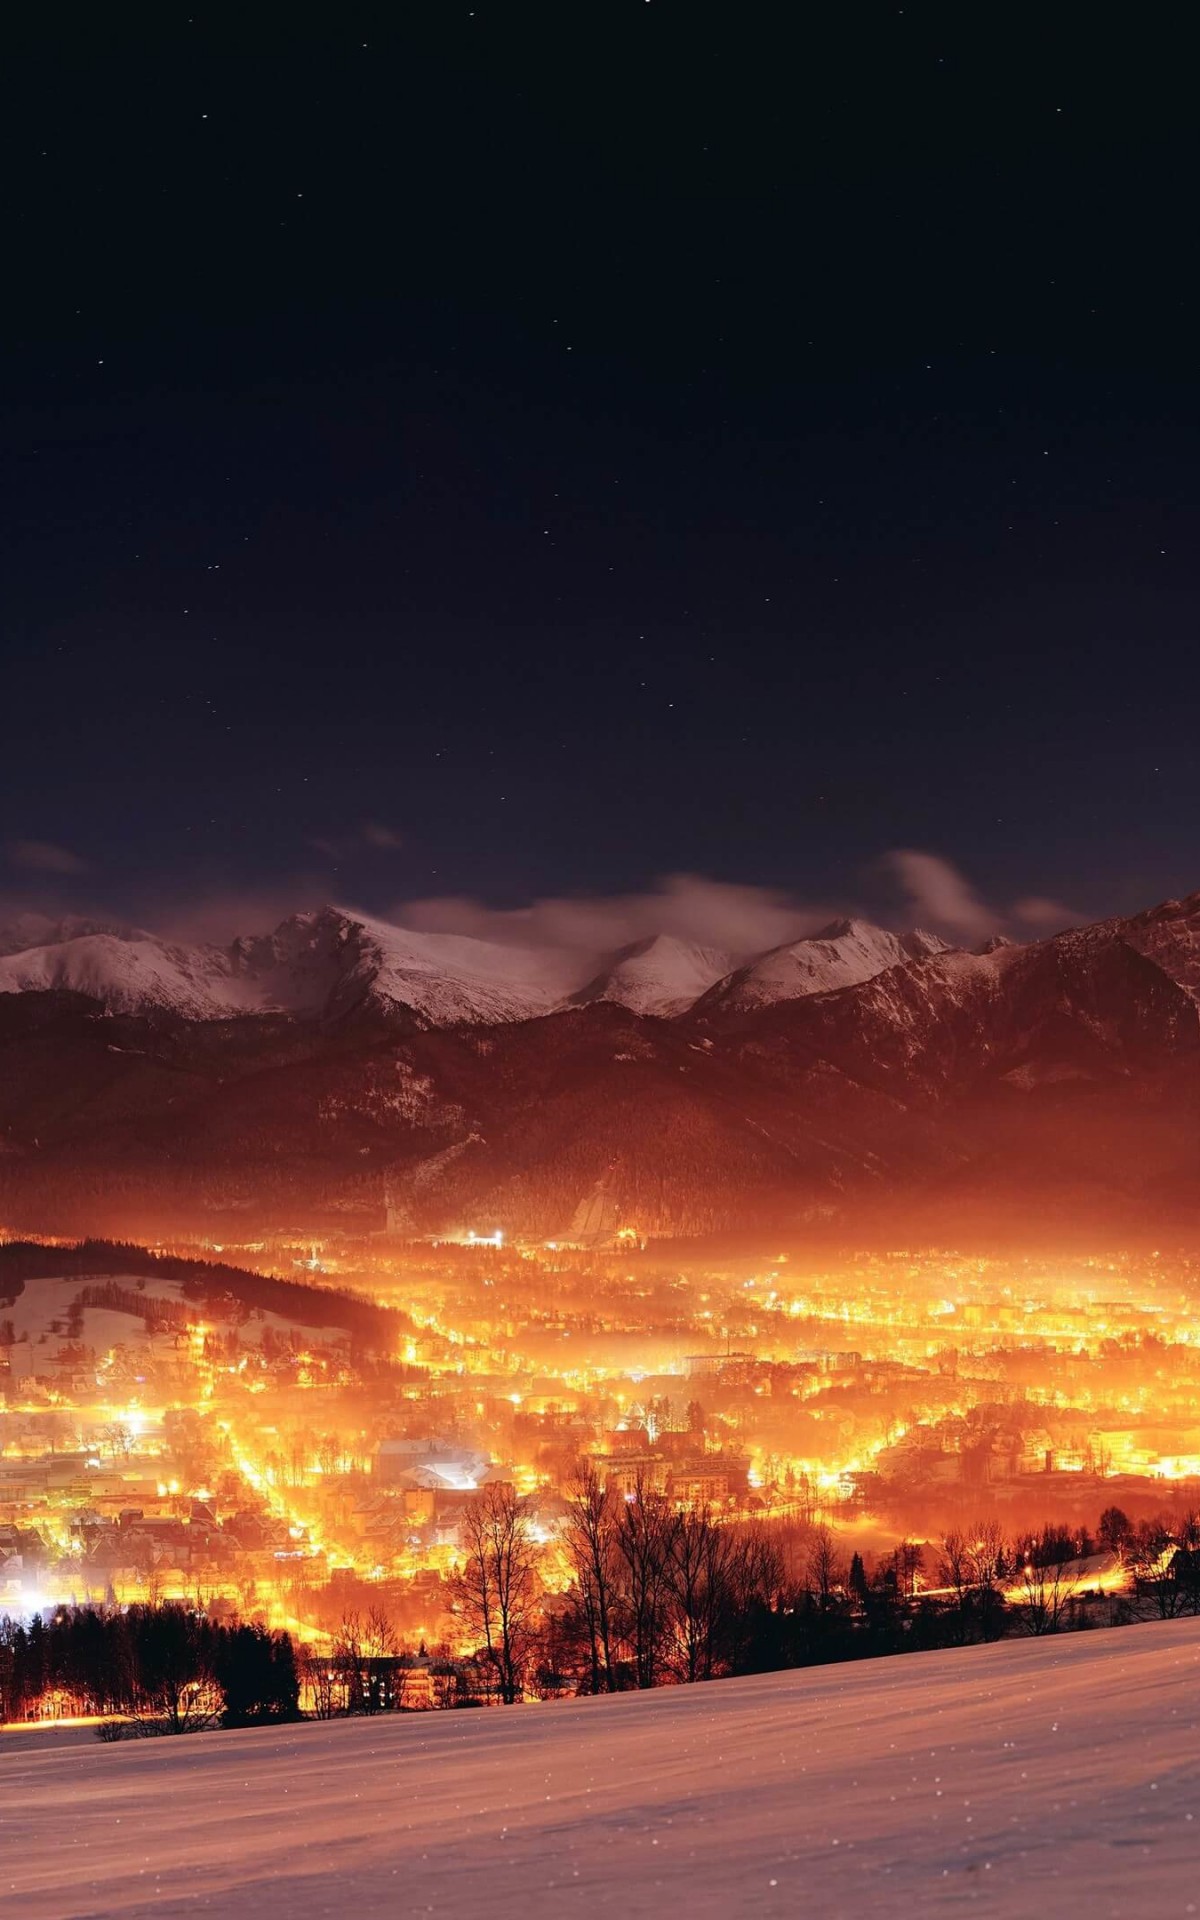 Zakopane City At Night - Poland Wallpaper for Amazon Kindle Fire HDX